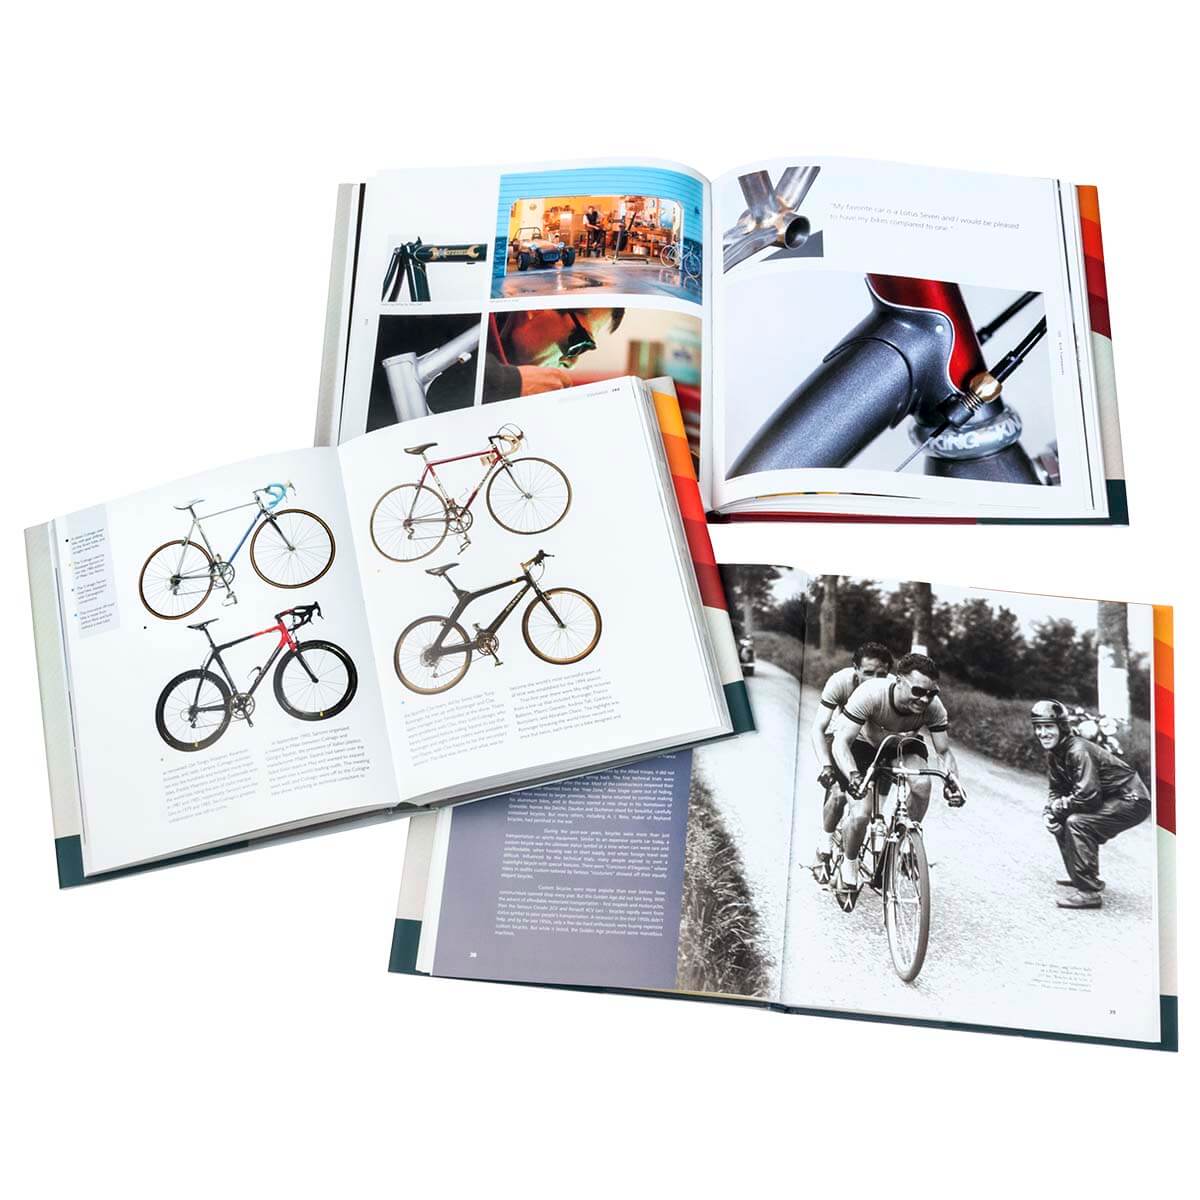 JuniperCustom Cycling Books Set, Cycling Book Collection with custom book jackets. JuniperCustom art covers are customizable.